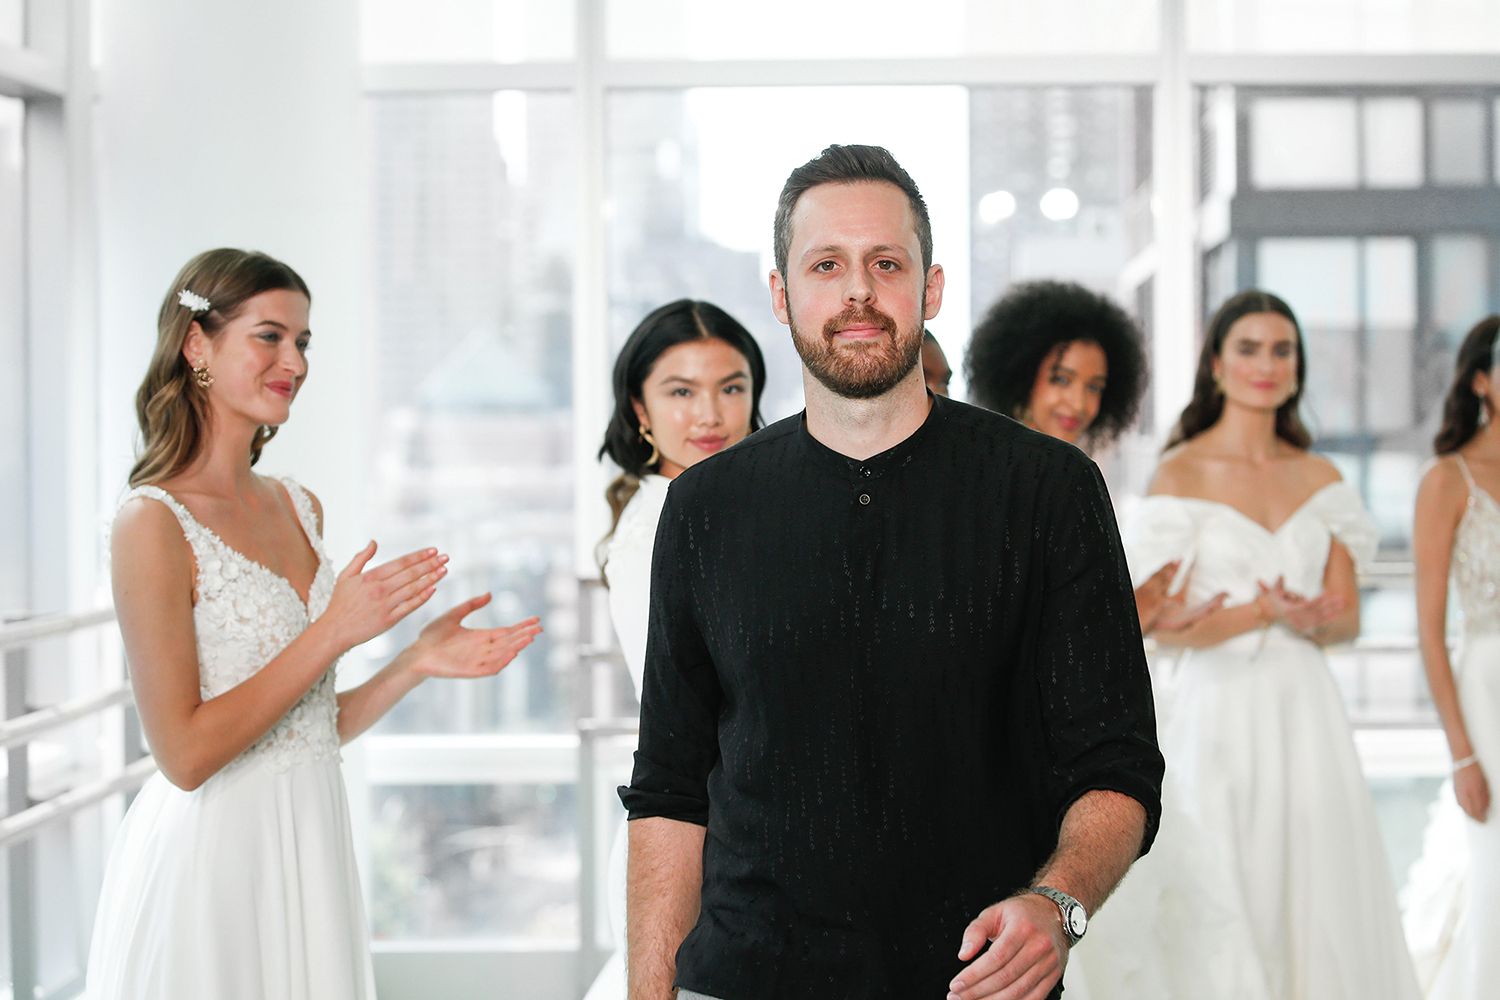 Gown designer Justin Alexander Warsaw offers tips for wedding dress shopping nj.